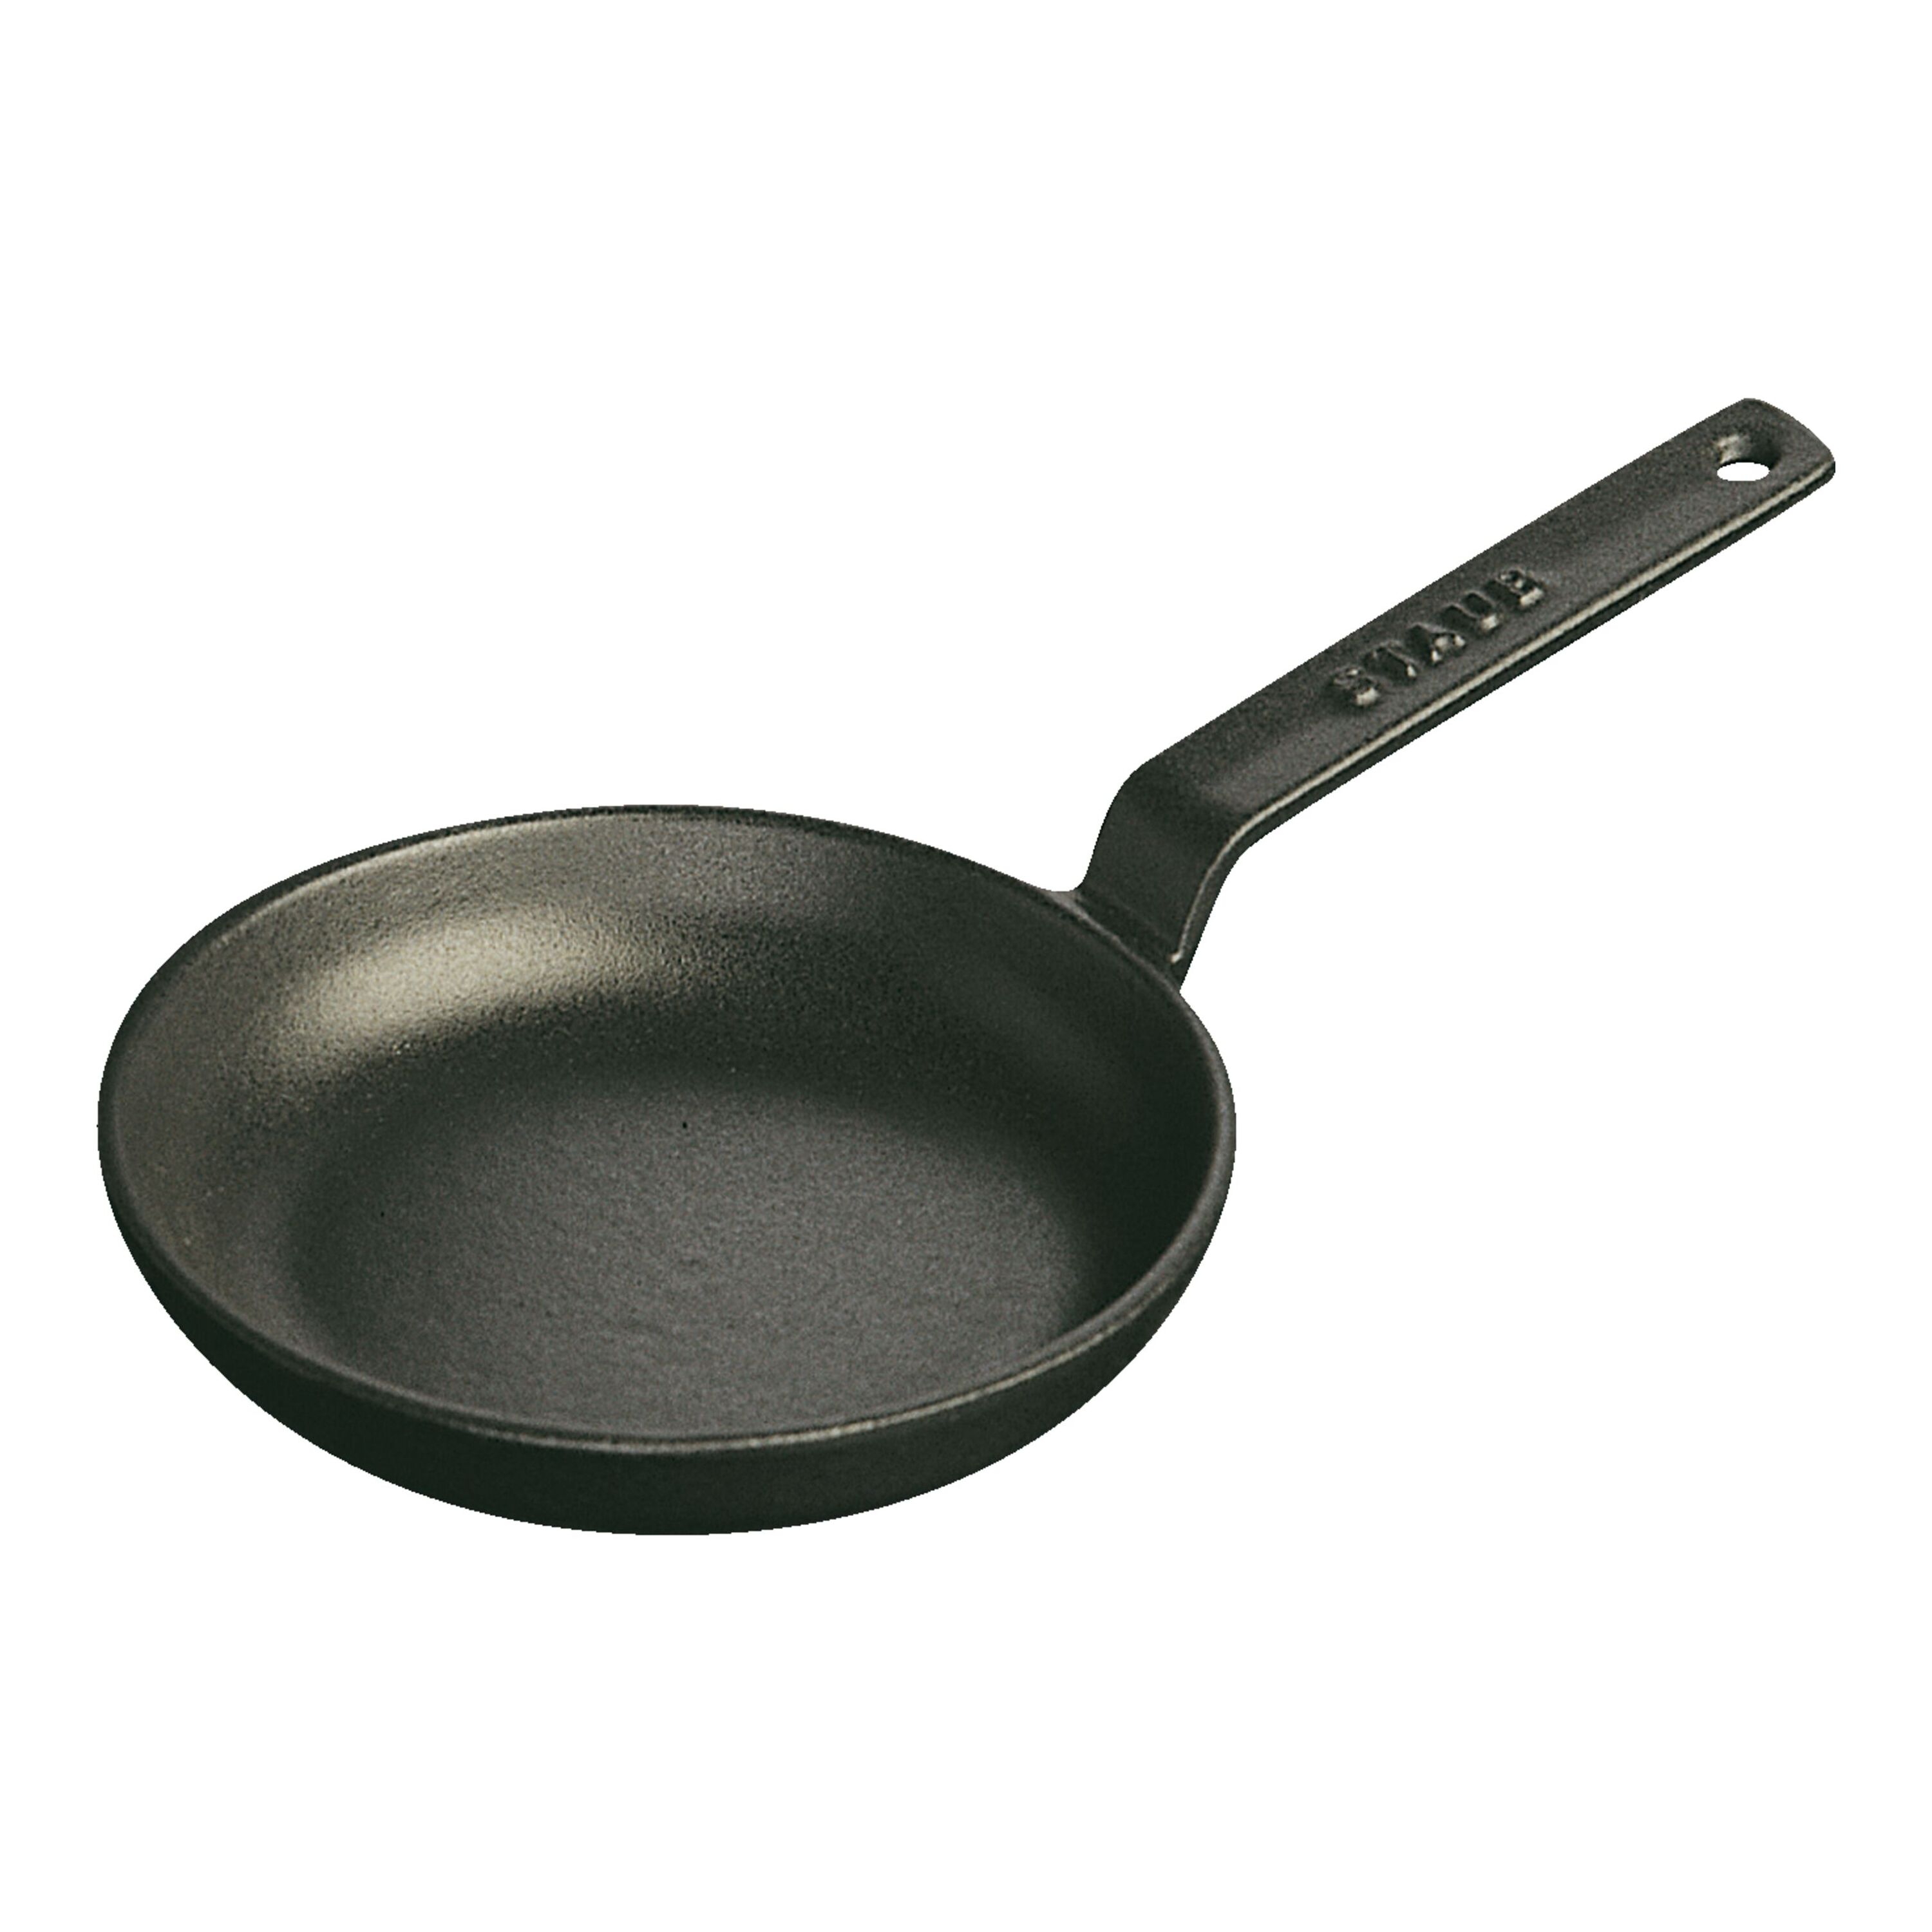  STAUB Cast Iron Perfect Pan, 4.5-quart, Black Matte: Home &  Kitchen